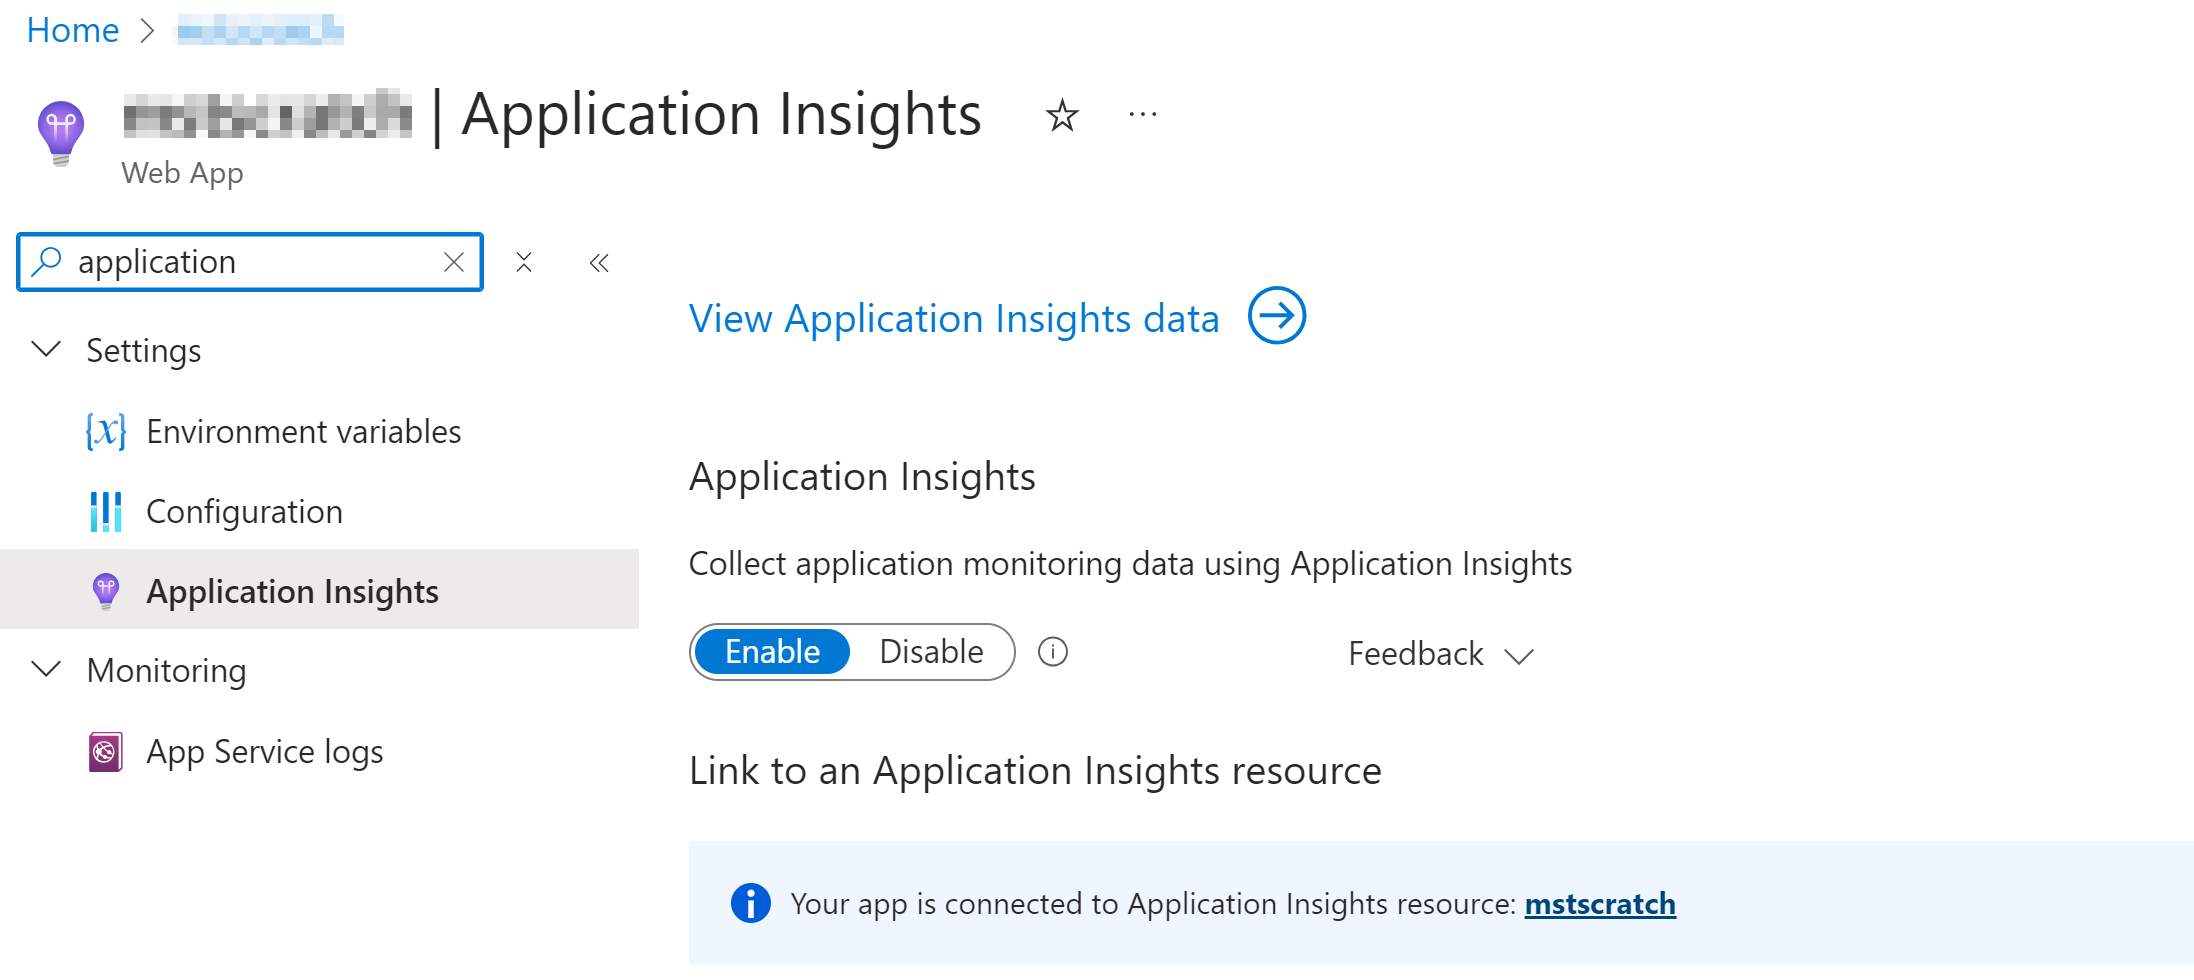 Application Insights enable via the Azure Portal